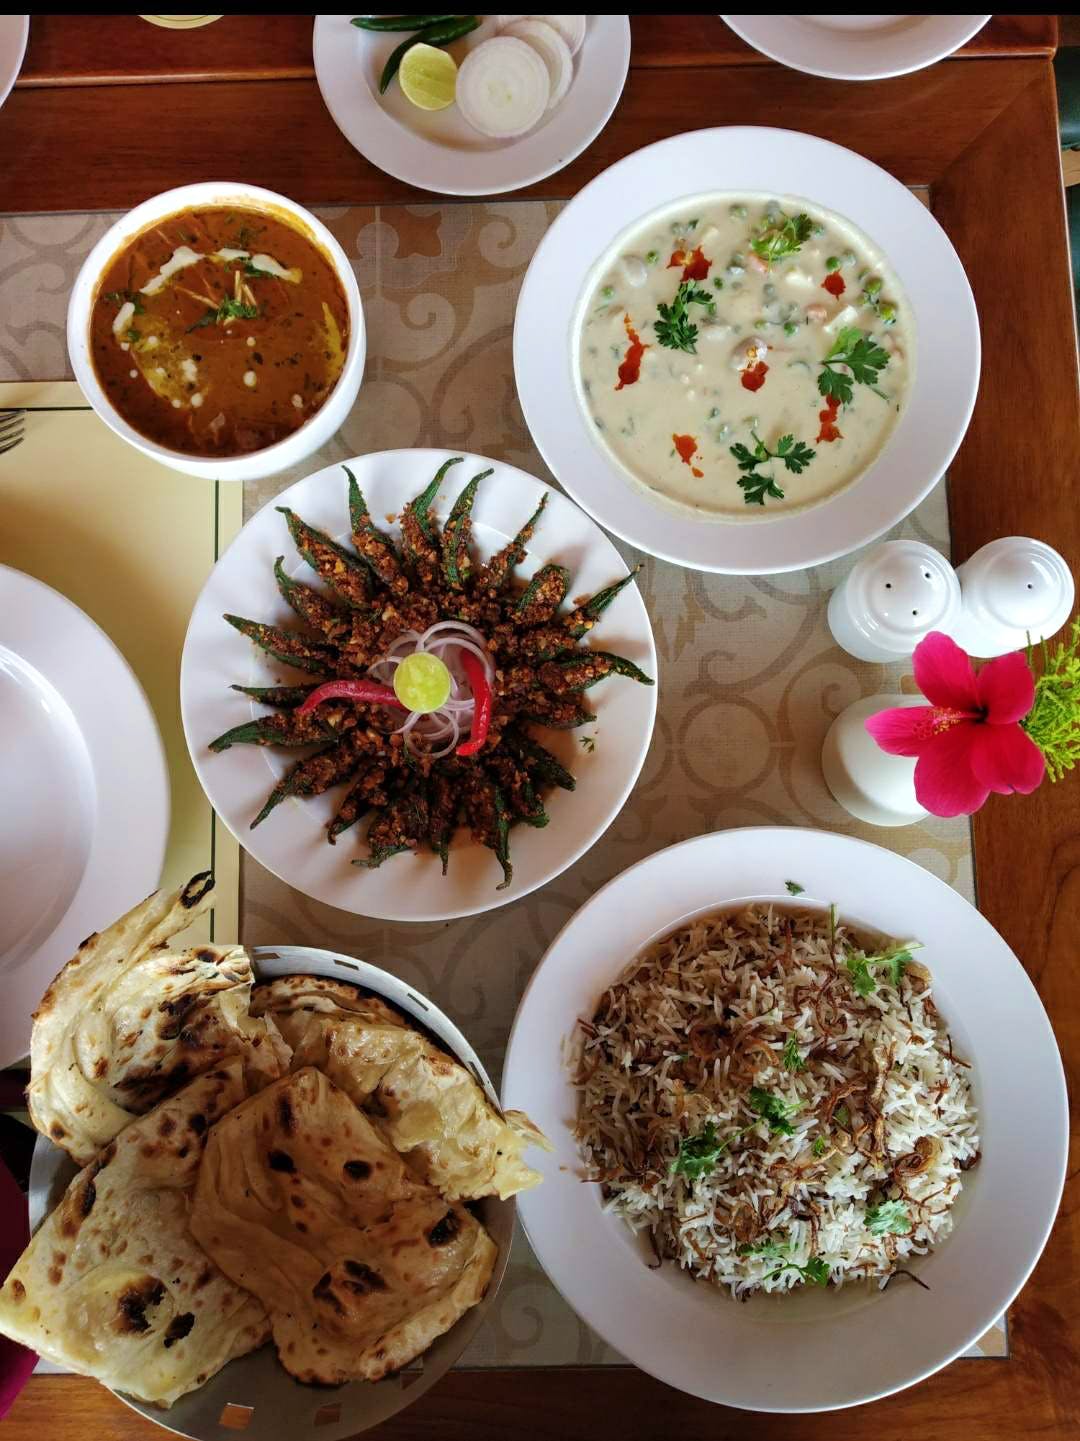 Dish,Food,Cuisine,Meal,Ingredient,Raita,Lunch,Comfort food,Indian cuisine,Produce